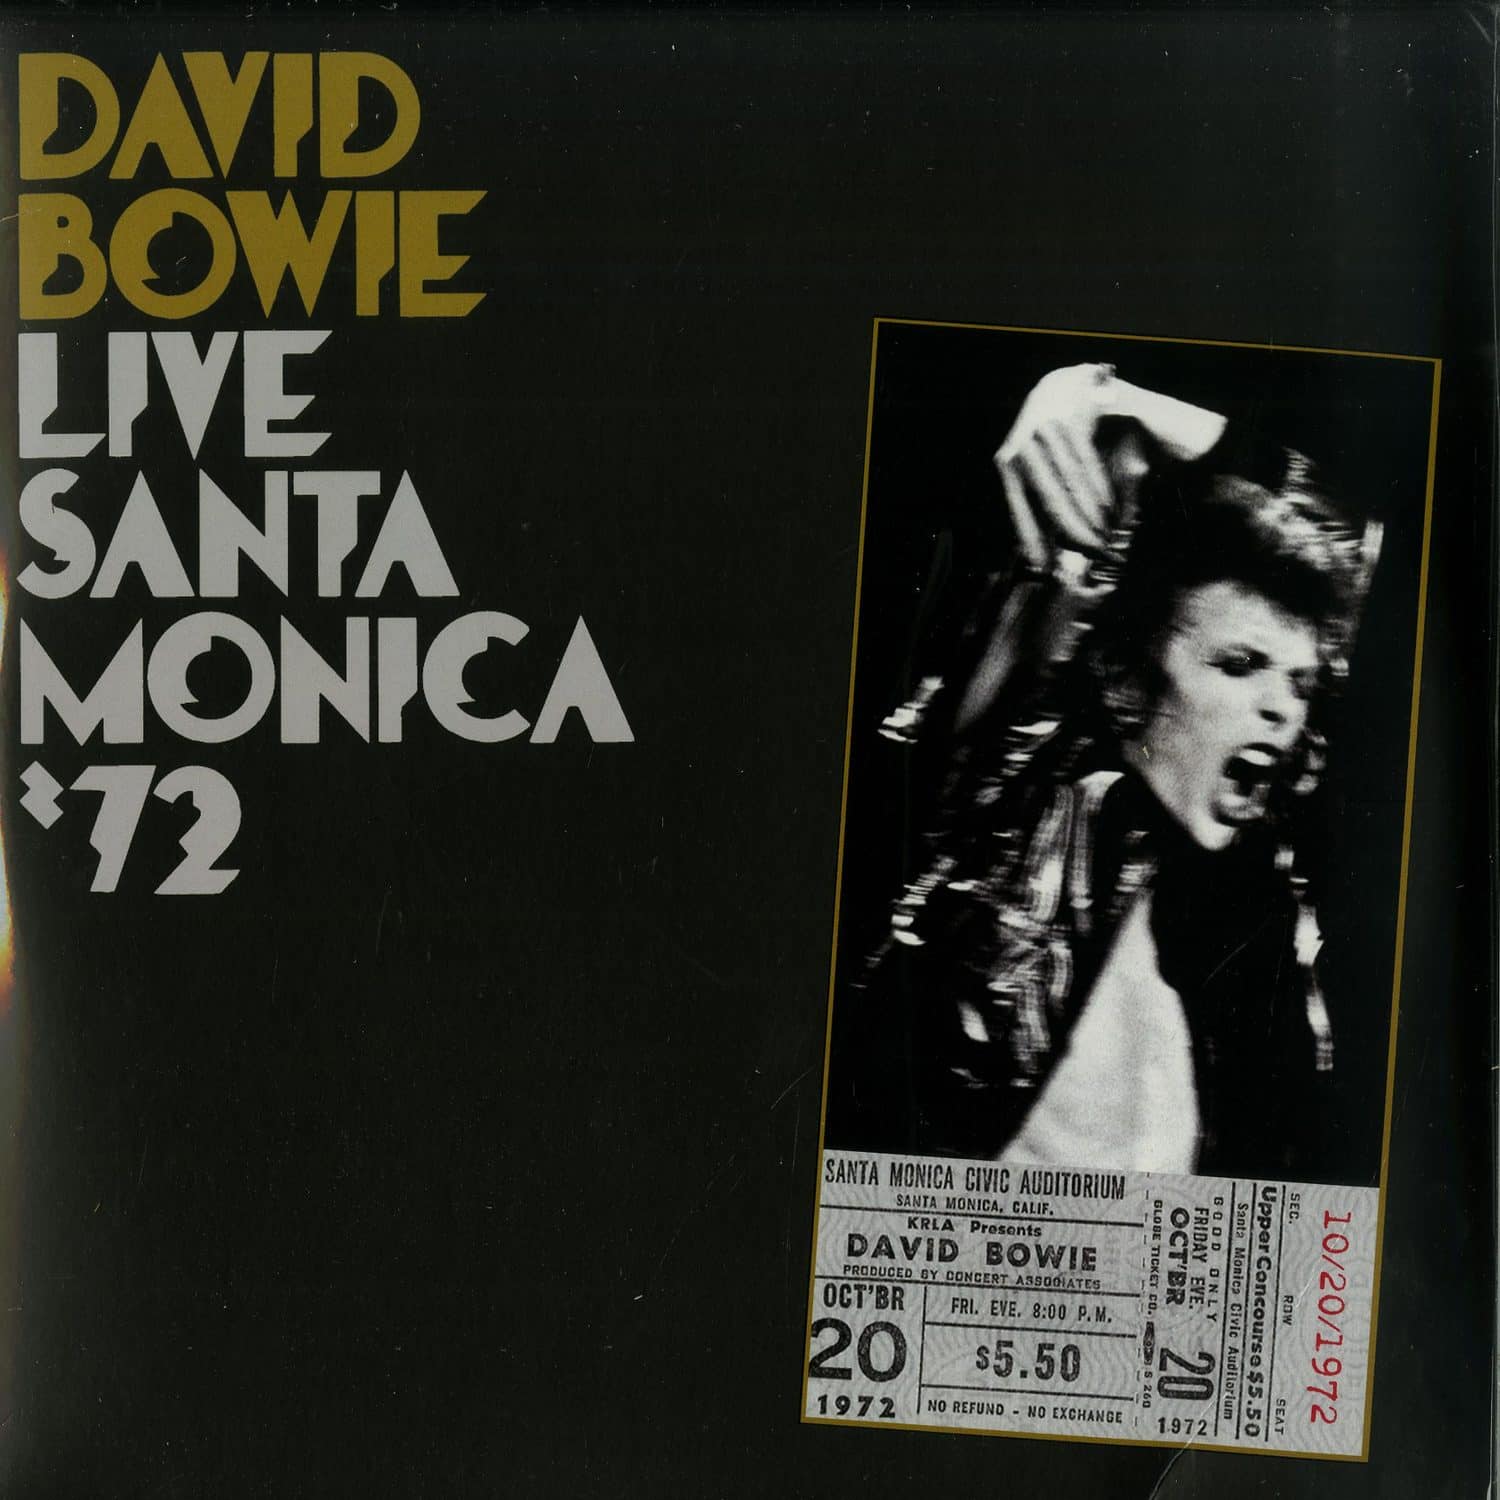 David Bowie - LIVE SANTA MONICA 72 